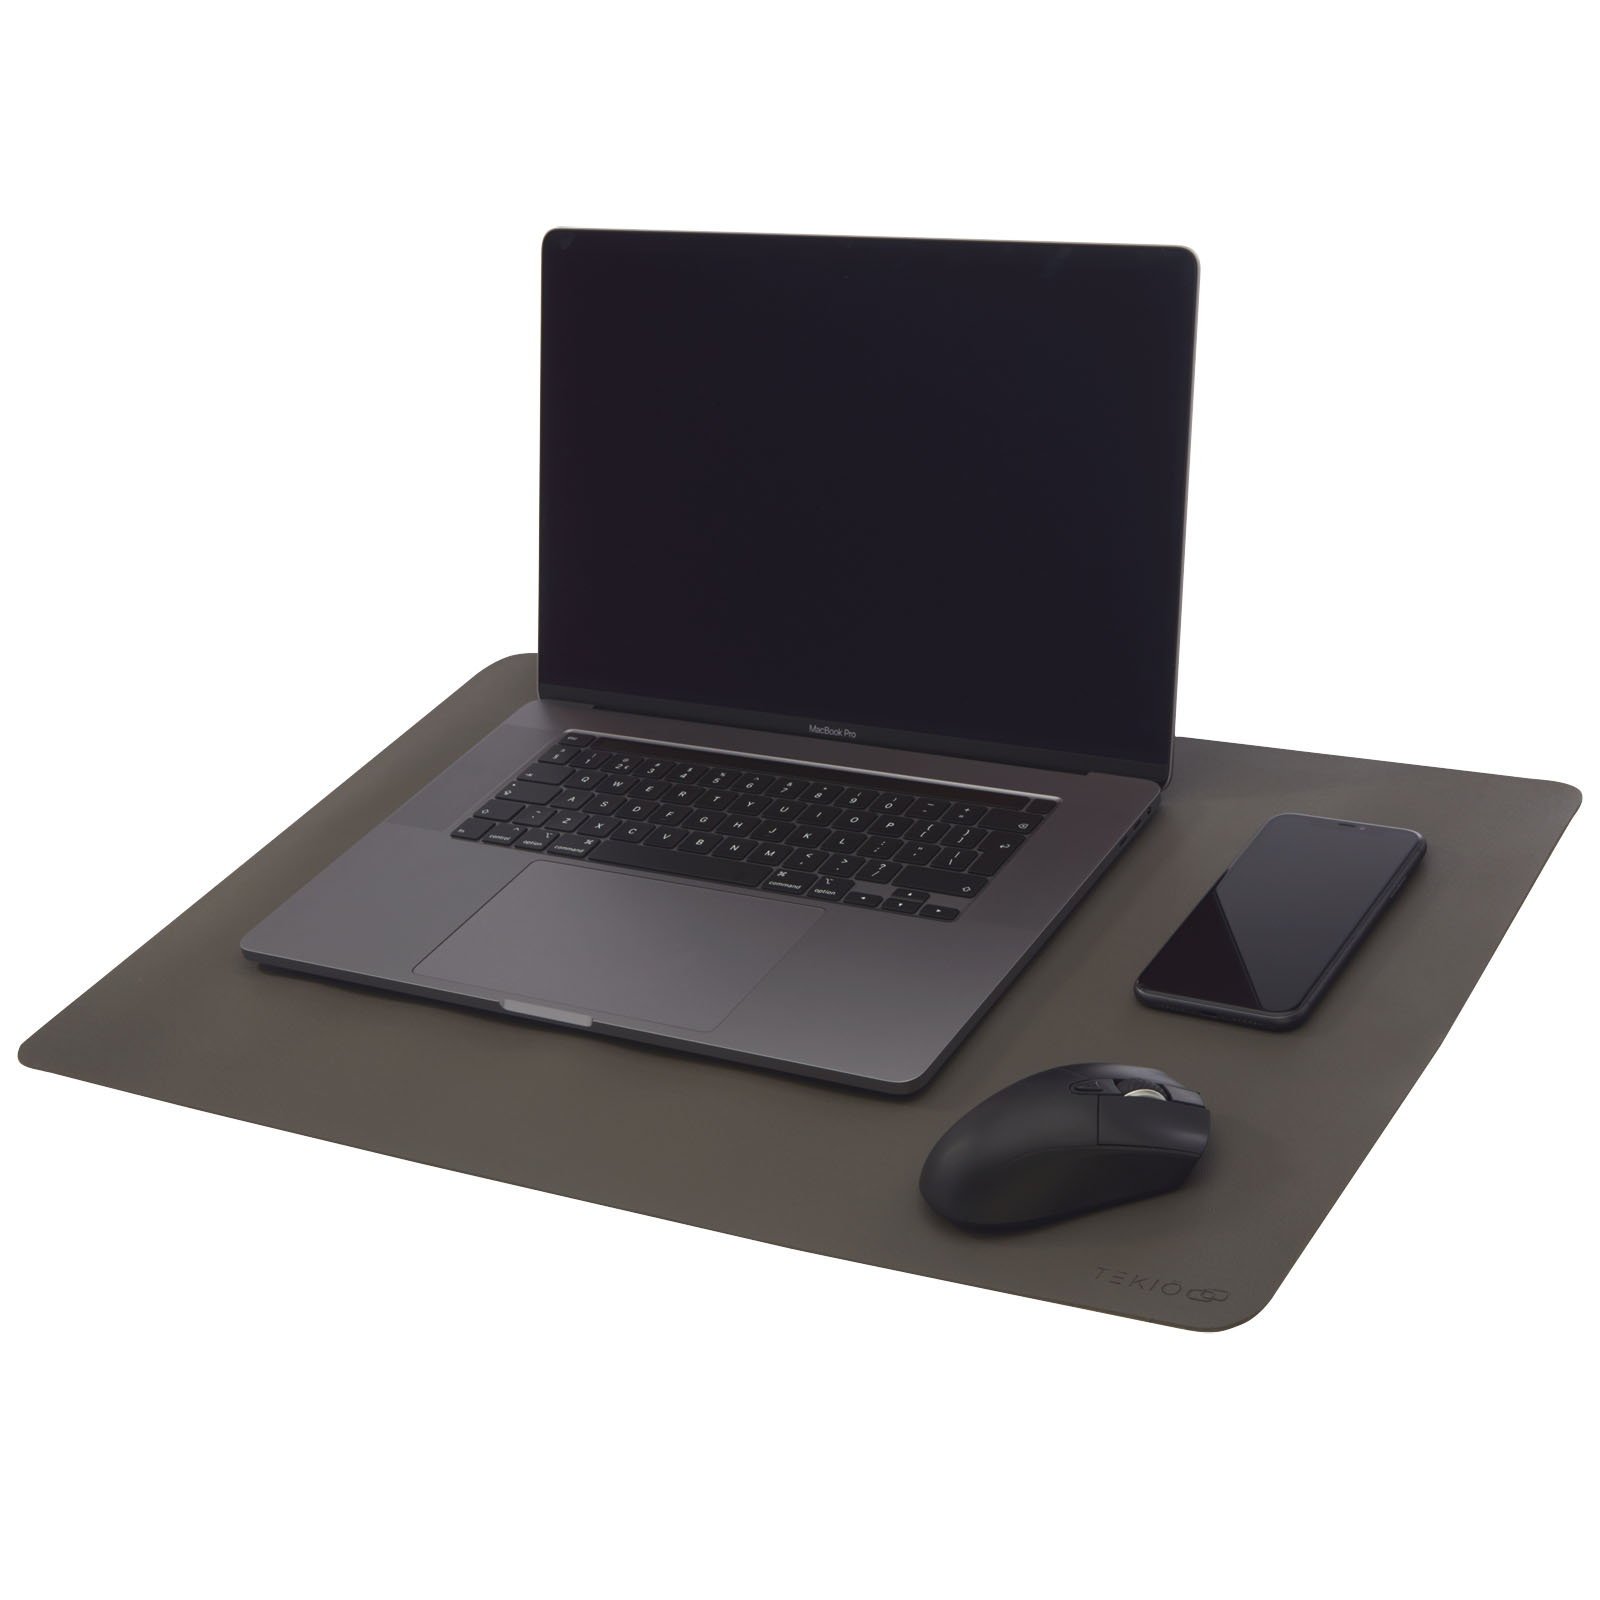 Advertising Desk Accessories - Hybrid desk pad